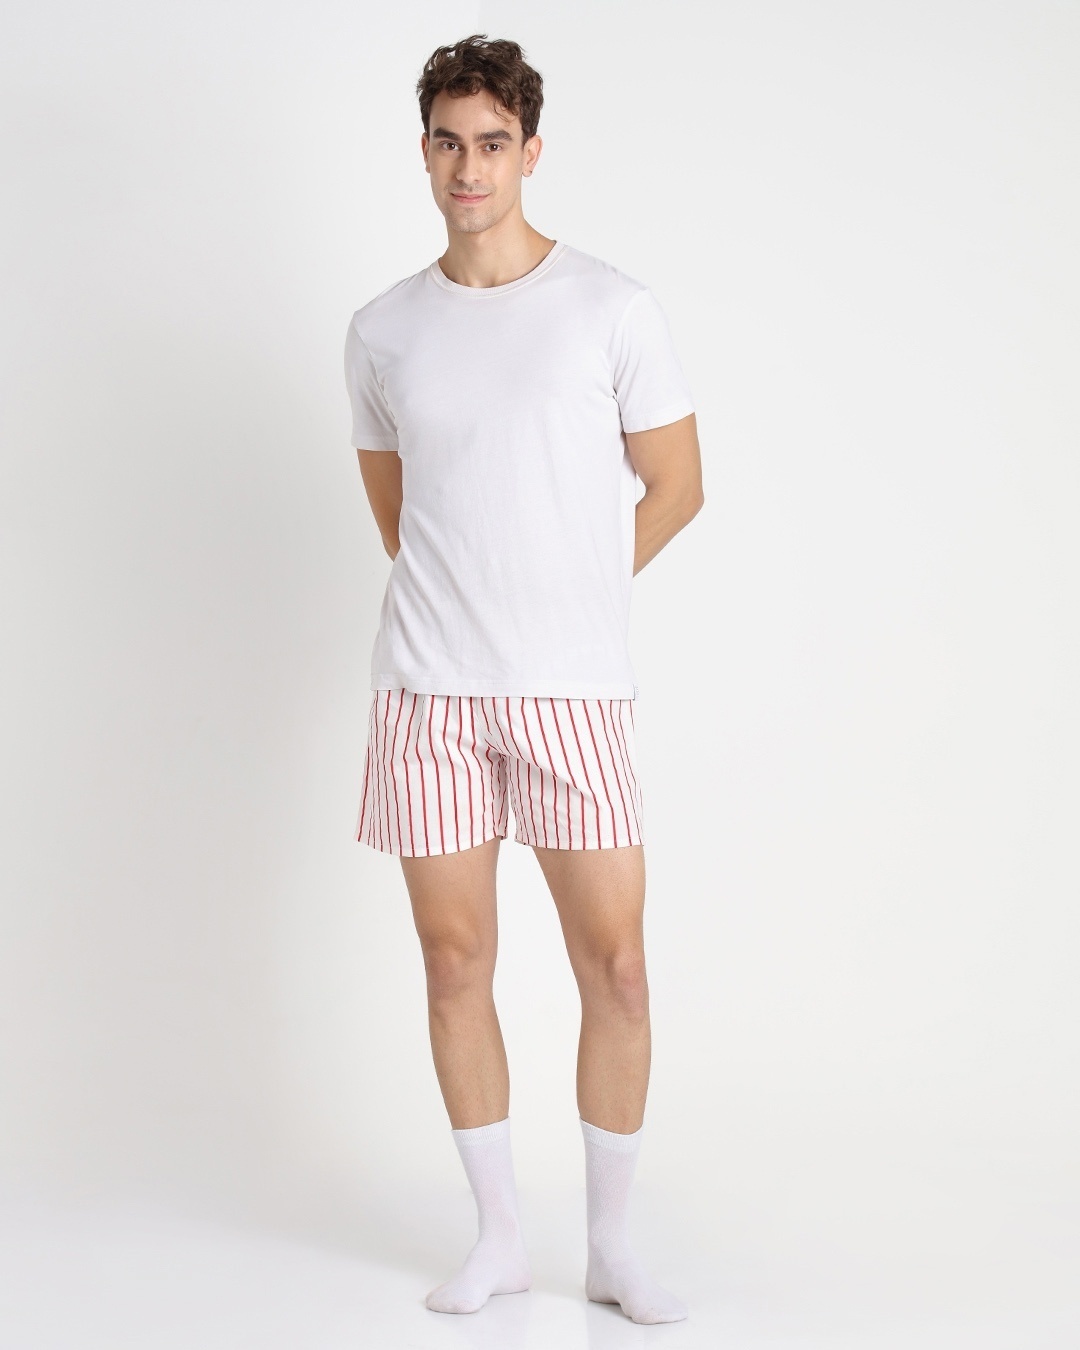 Buy Men's Retro Red Stripe Boxers for Men white Online at Bewakoof